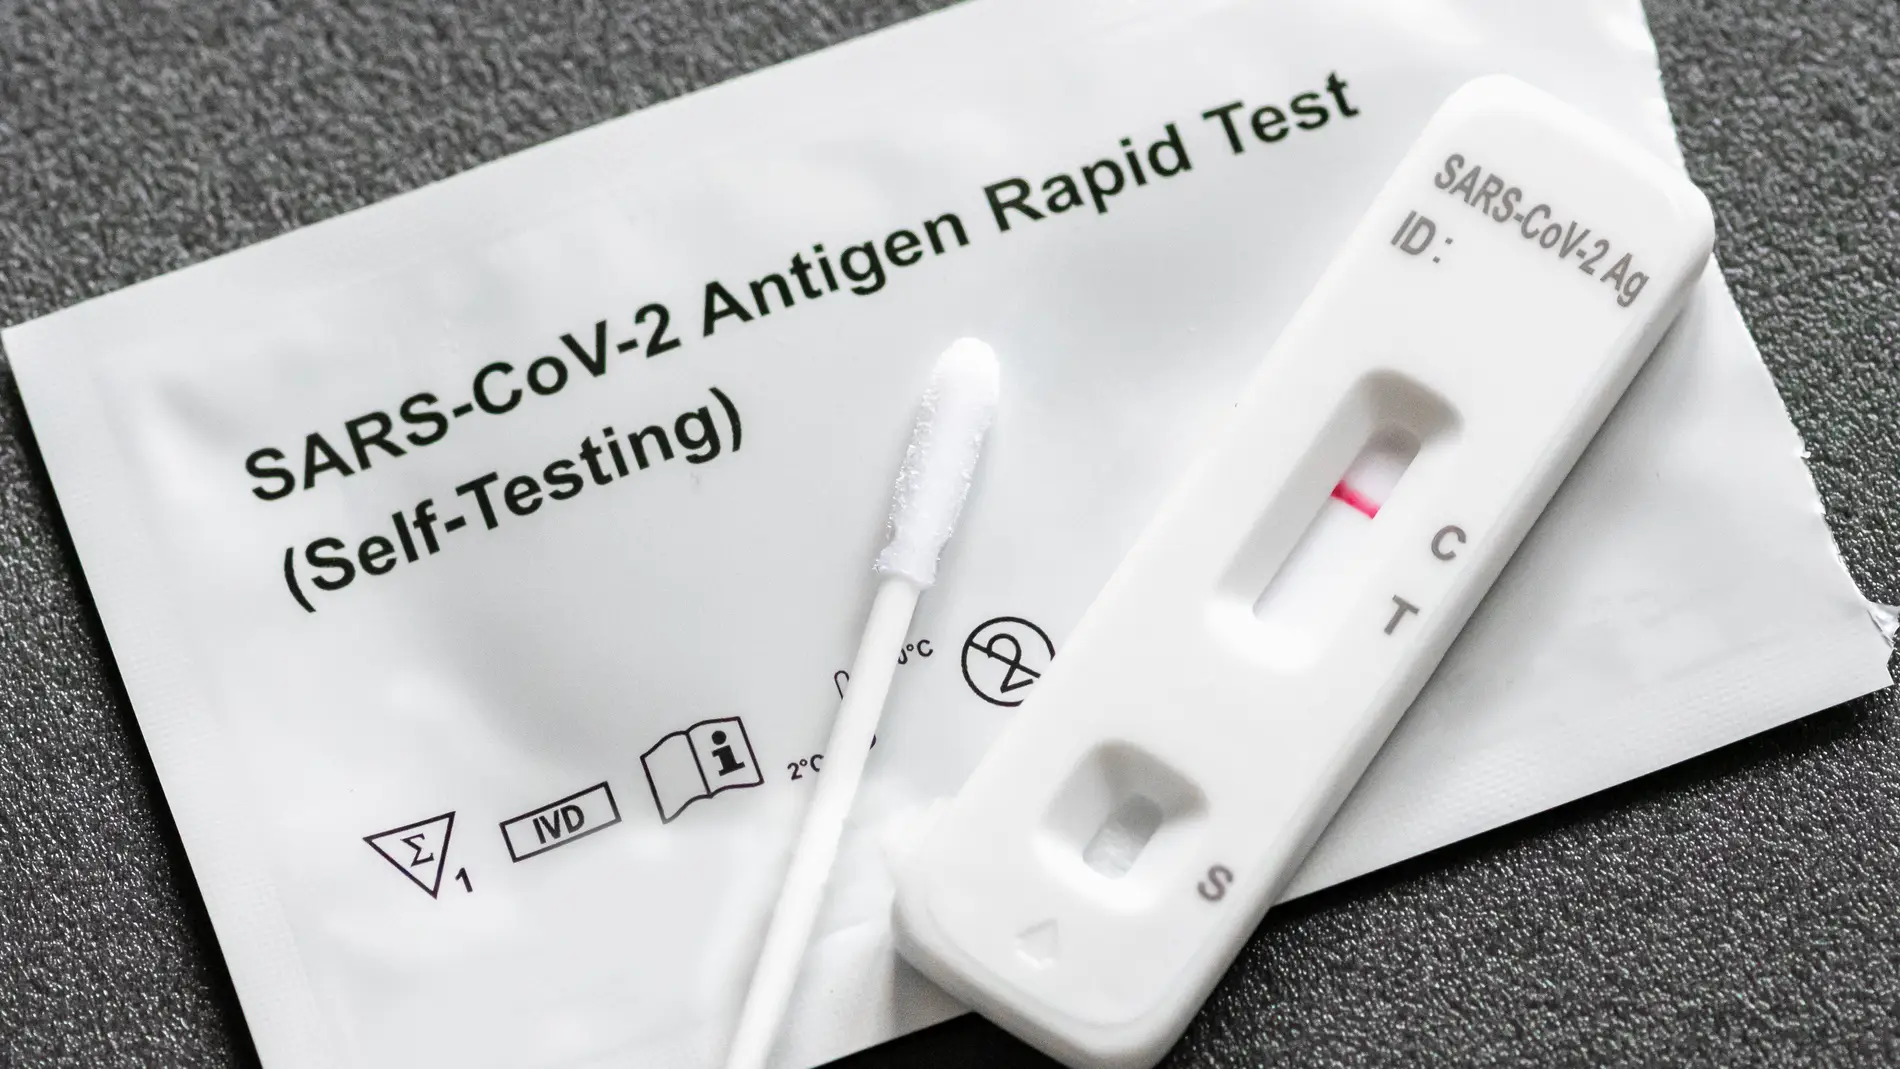 Test de antígenos